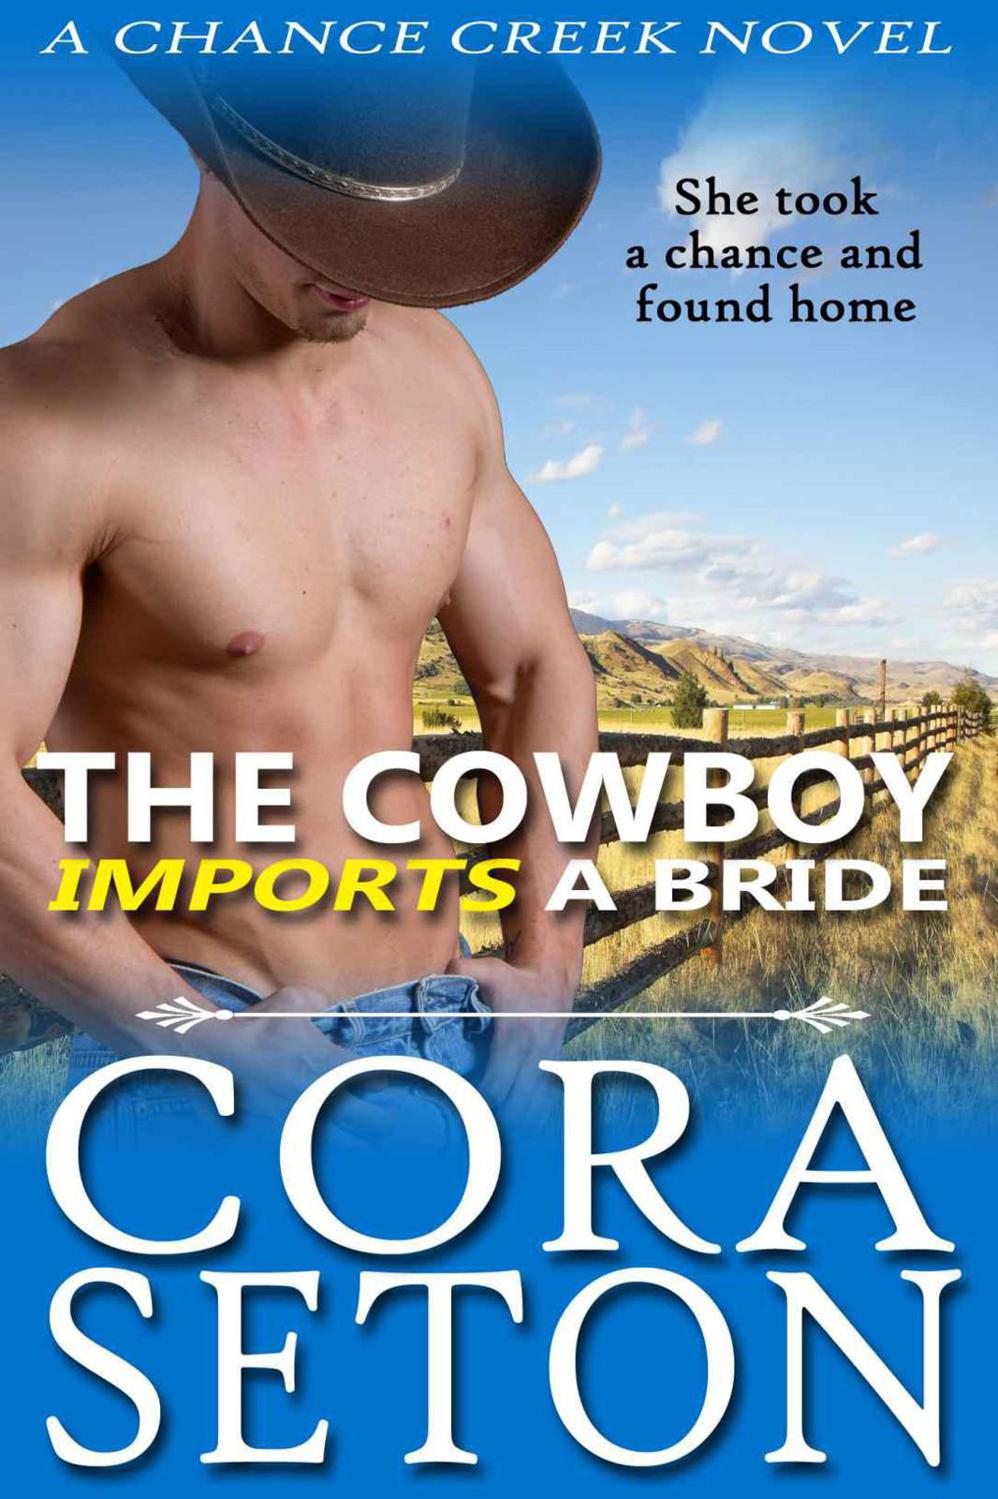 The Cowboy Imports a Bride(The Cowboys Of Chance Creek #3) by Cora Seton